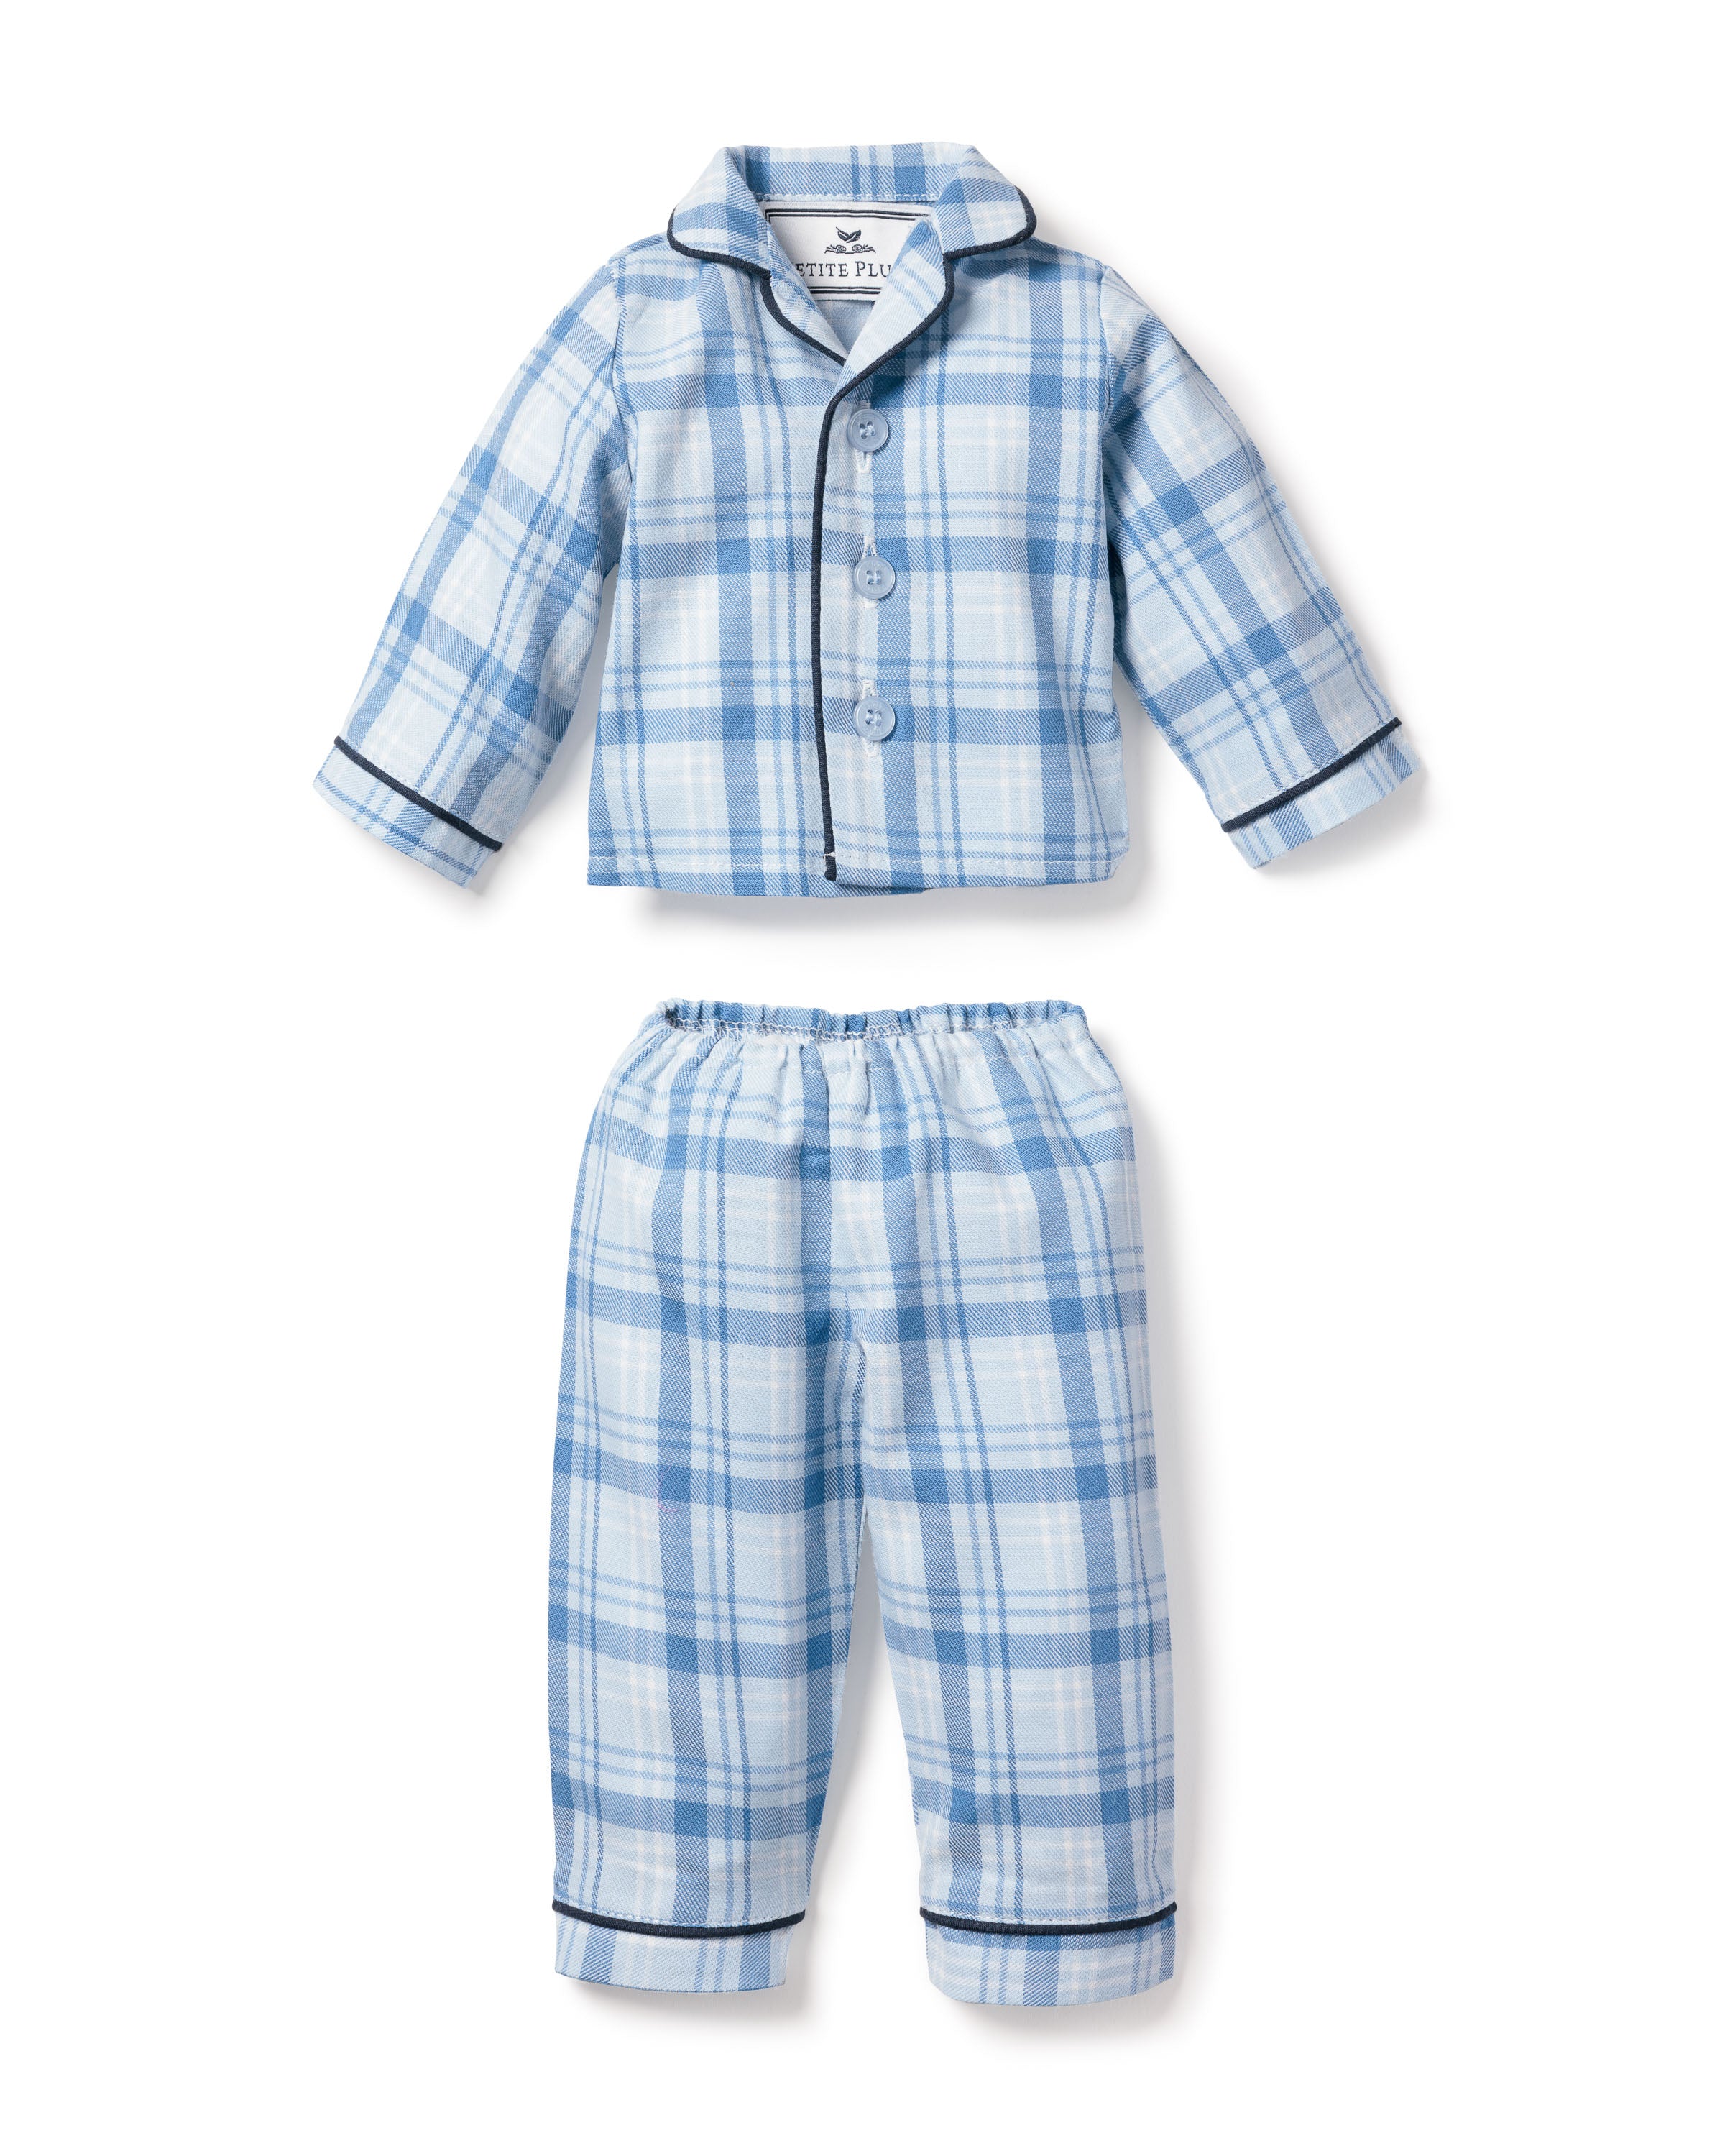 Kid's Twill Doll Pajamas in Seafarer Tartan